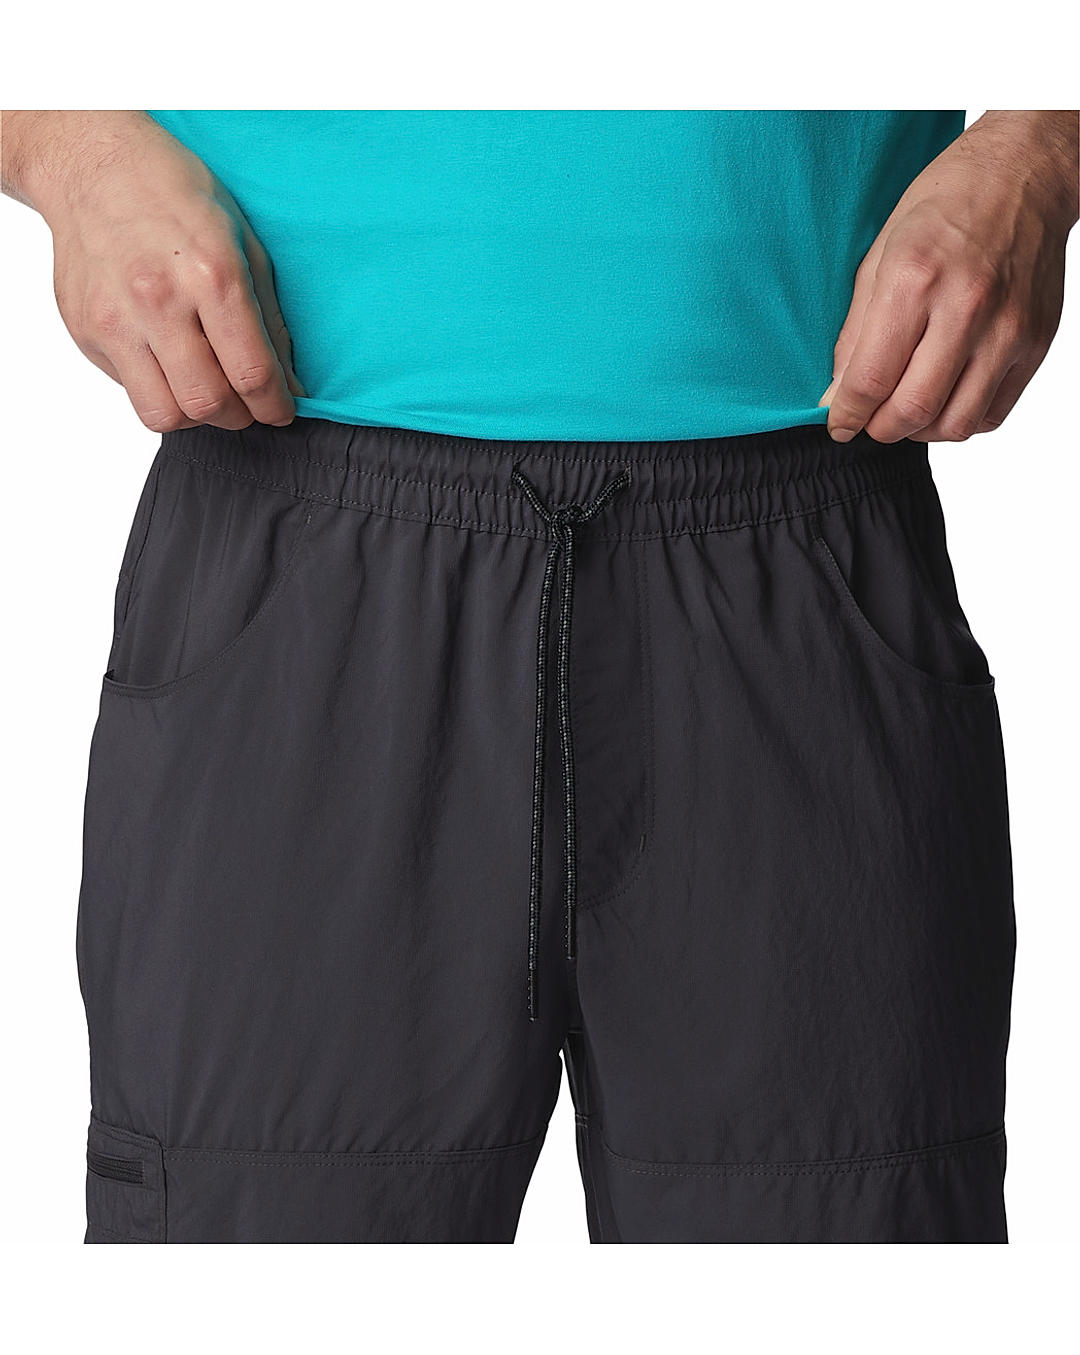 Buy Columbia Black Coral Ridge Pull-On Pant For Men Online at Adventuras